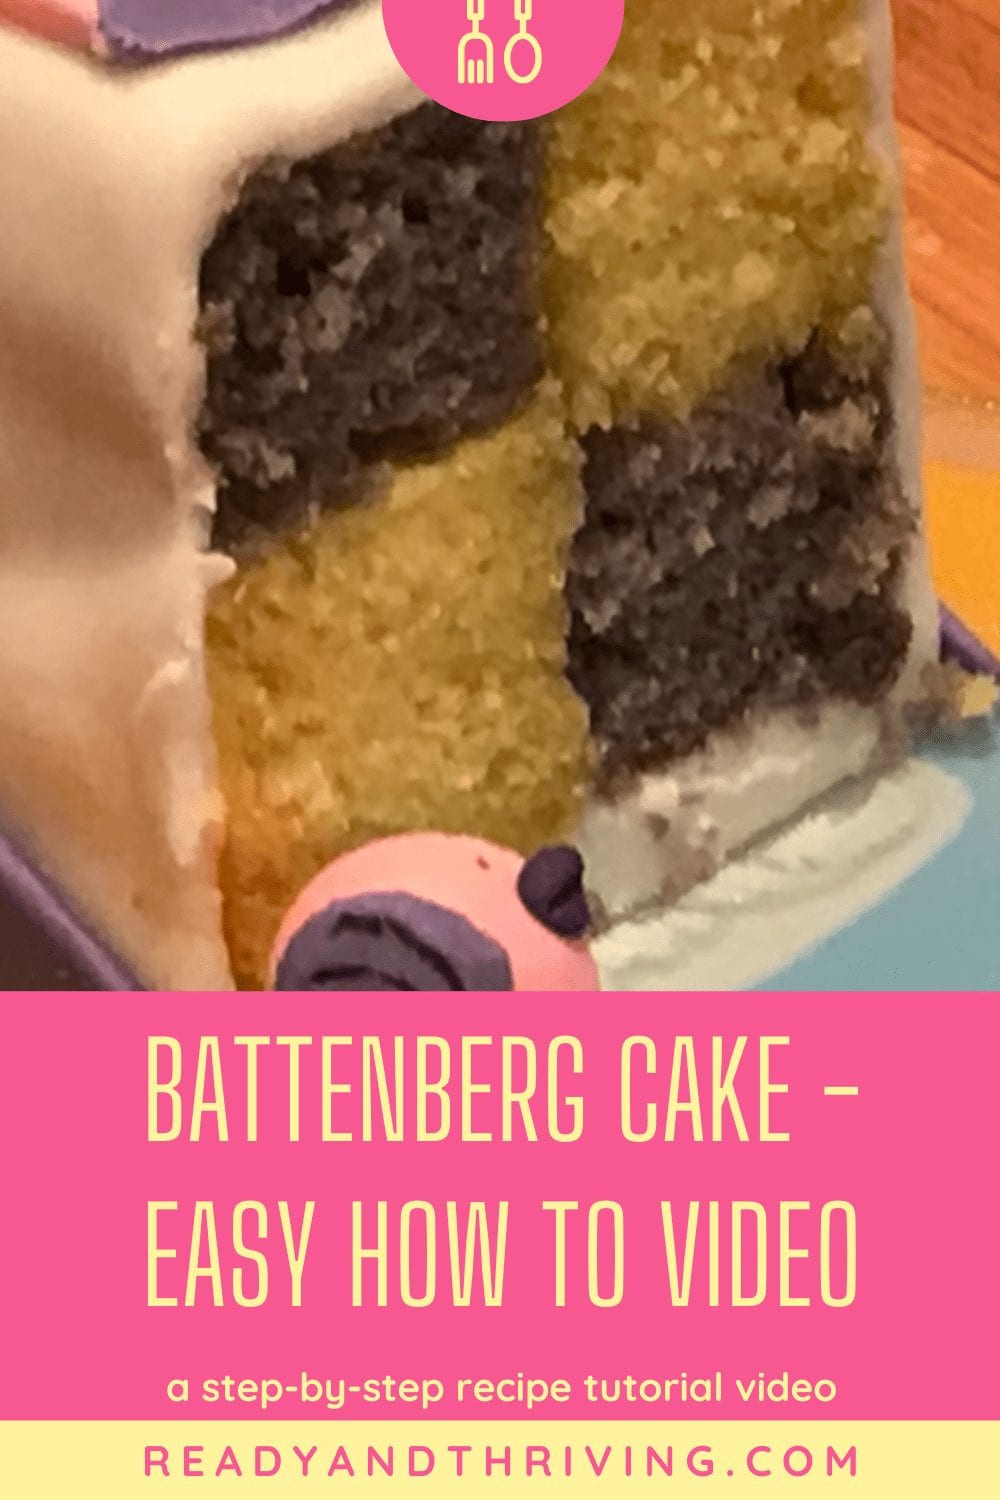 Best Battenberg Cake Recipe - How To Make Battenberg Cake